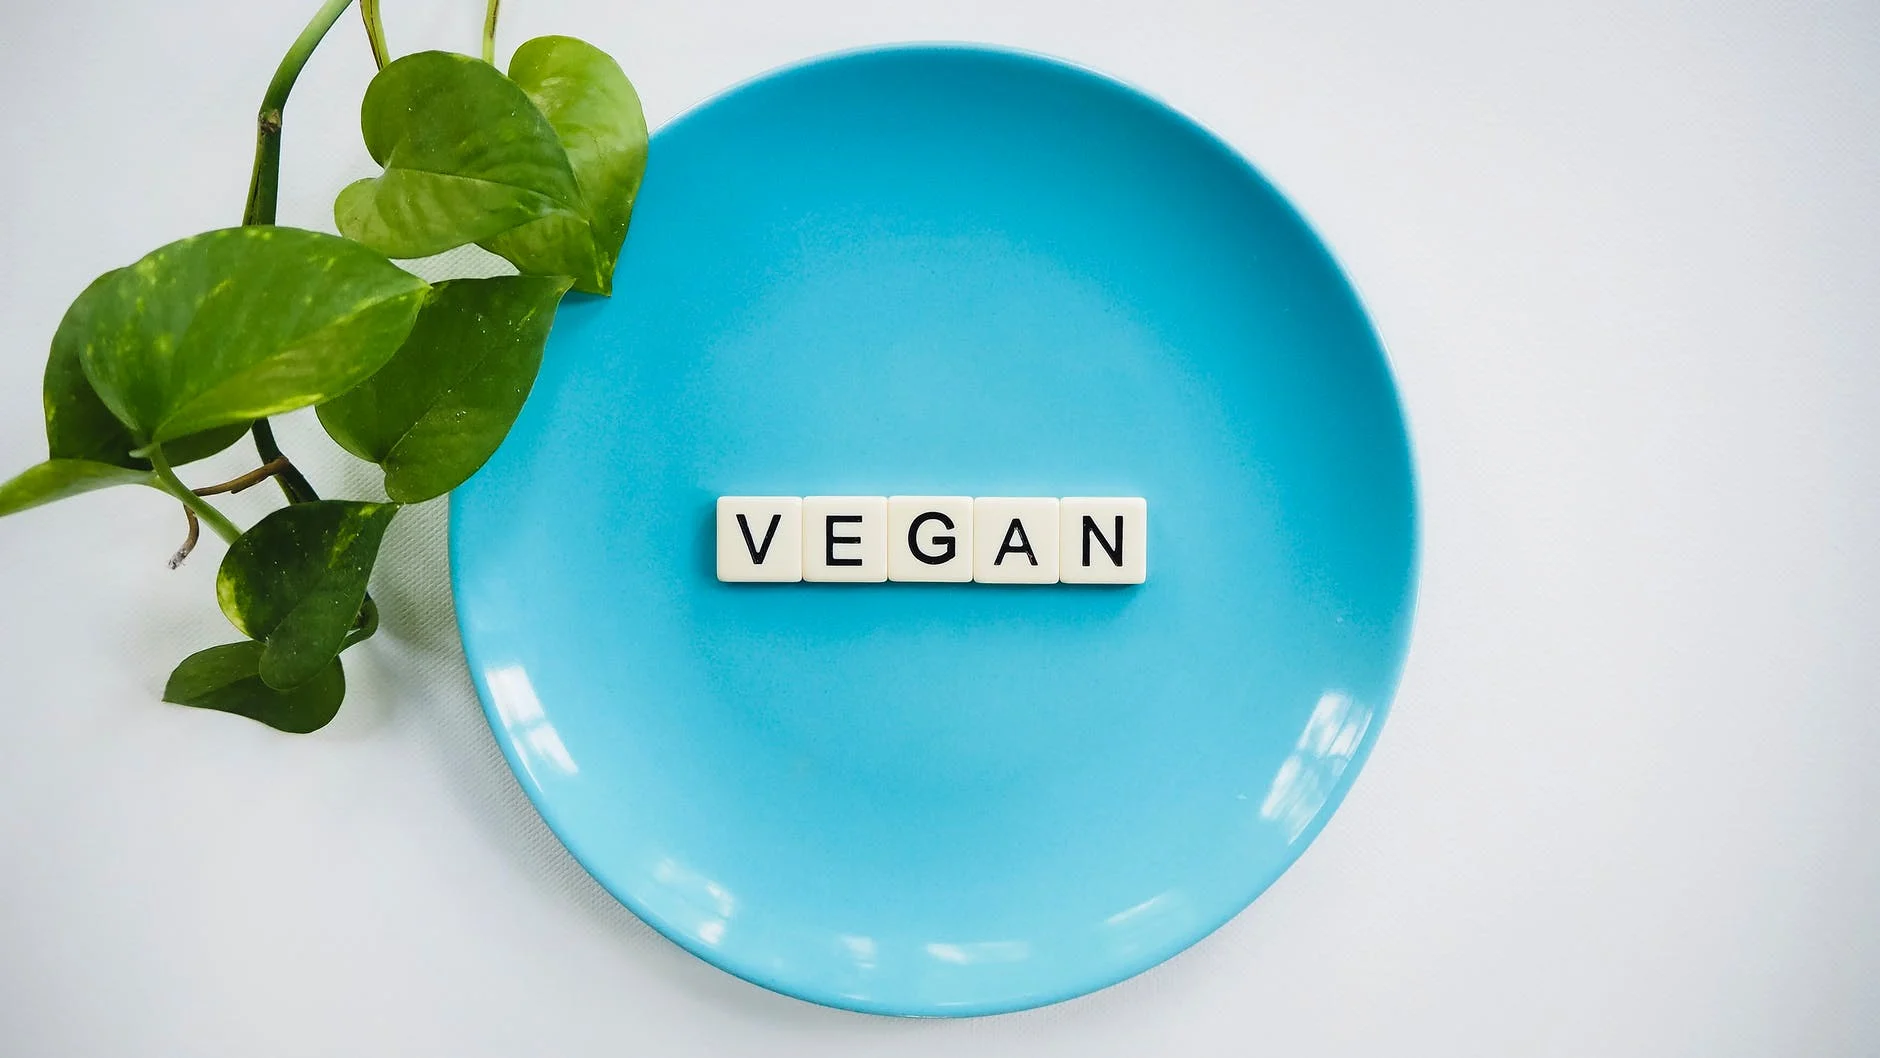 scrabble tiles speling vegan in blue ceramic plate